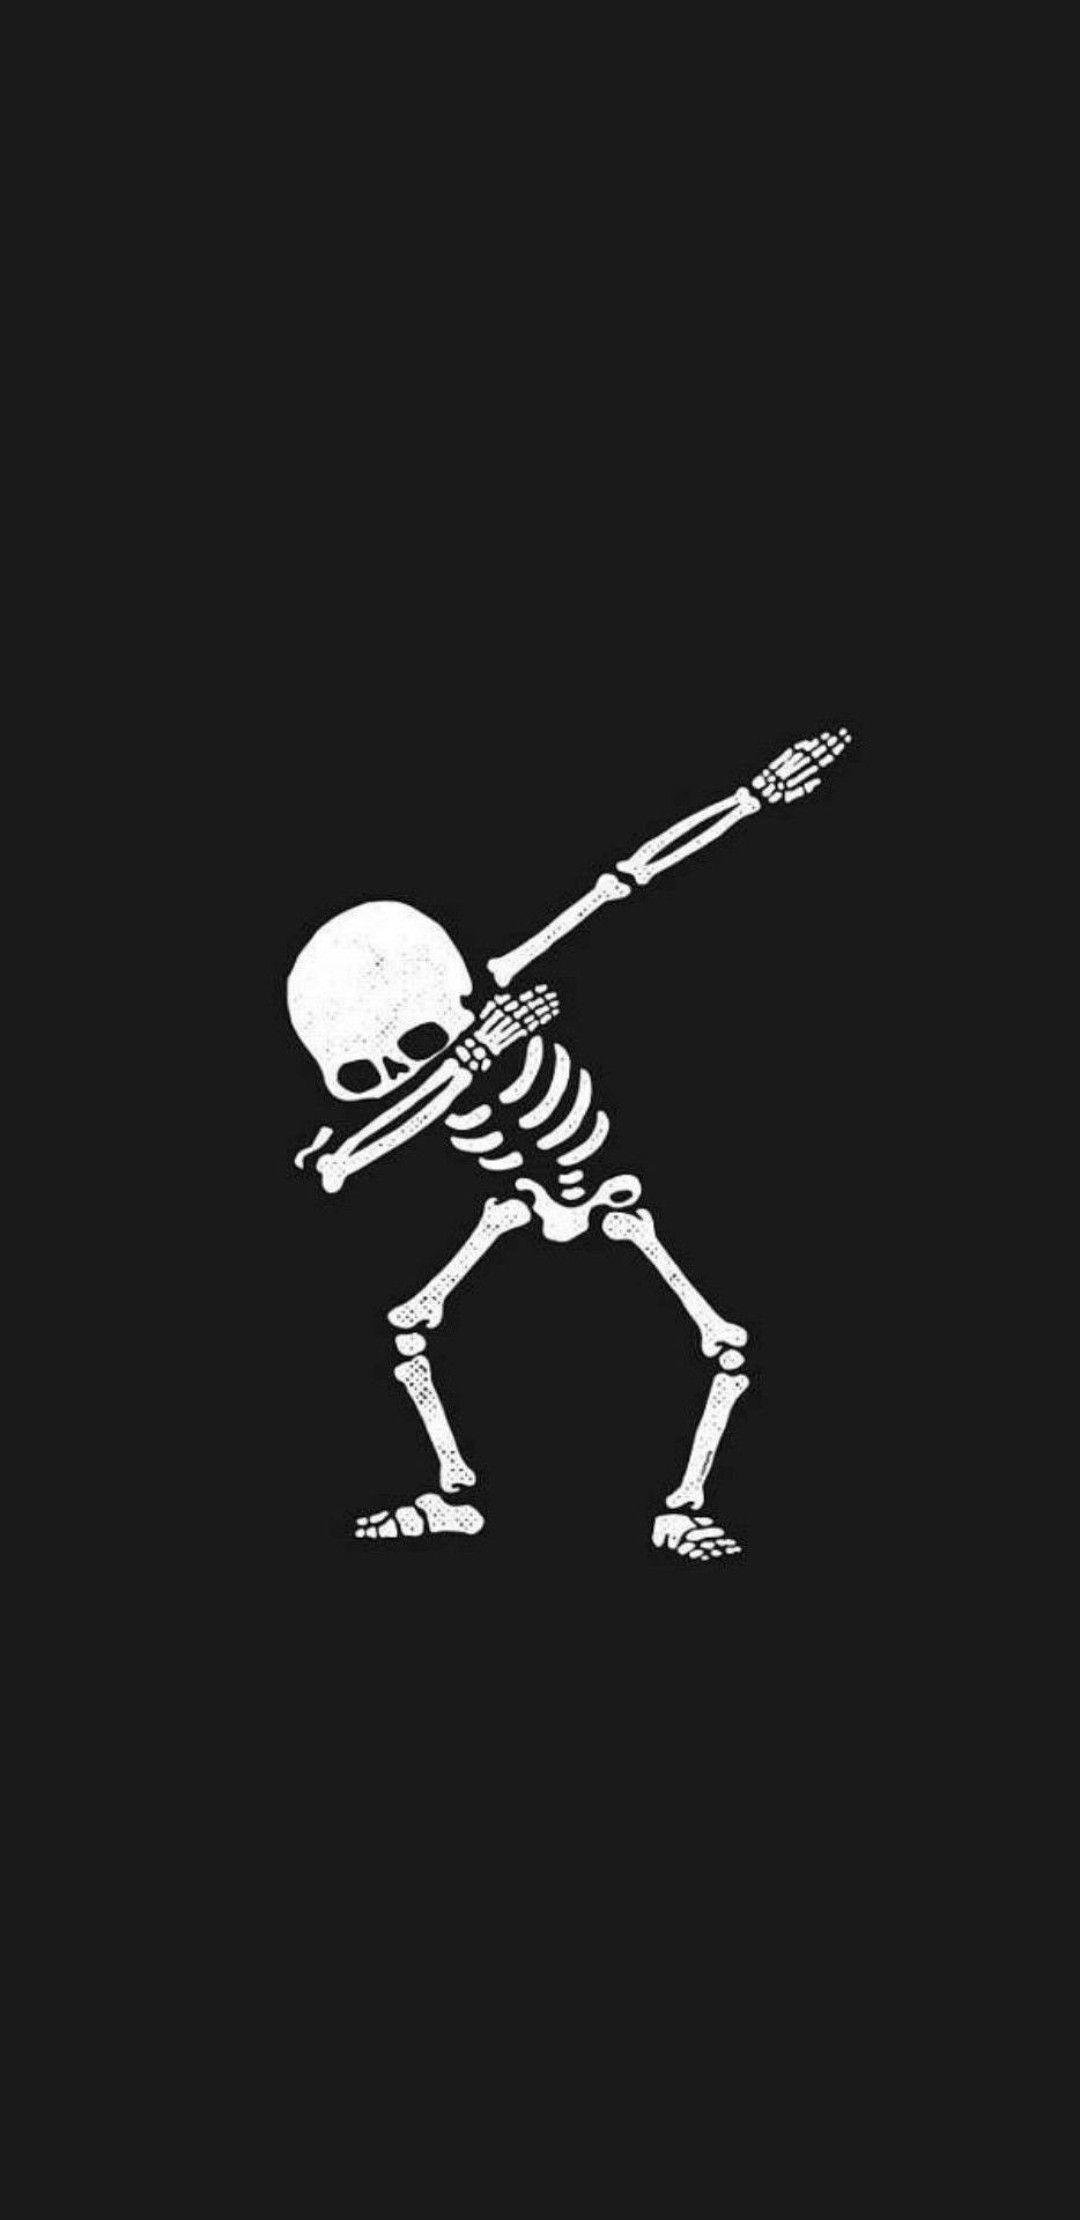 Spooky scary skeleton